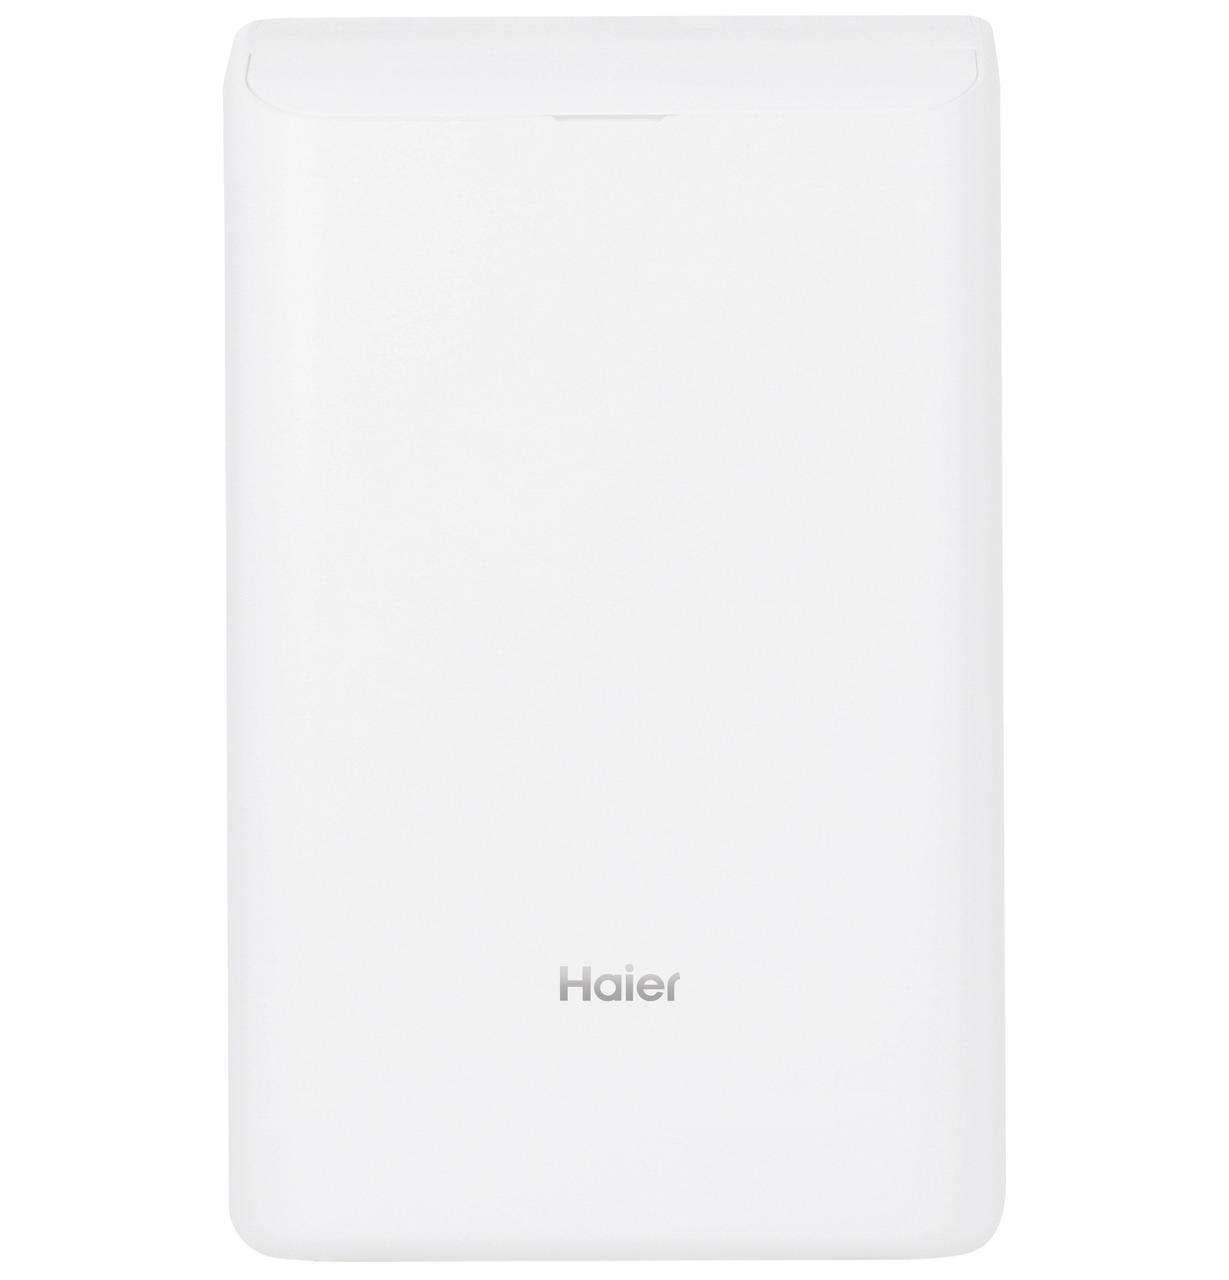 Haier QPCA10YBMW Haier 10,000 Btu Portable Air Conditioner For Medium Rooms Up To 350 Sq Ft. (7,200 Btu Sacc)